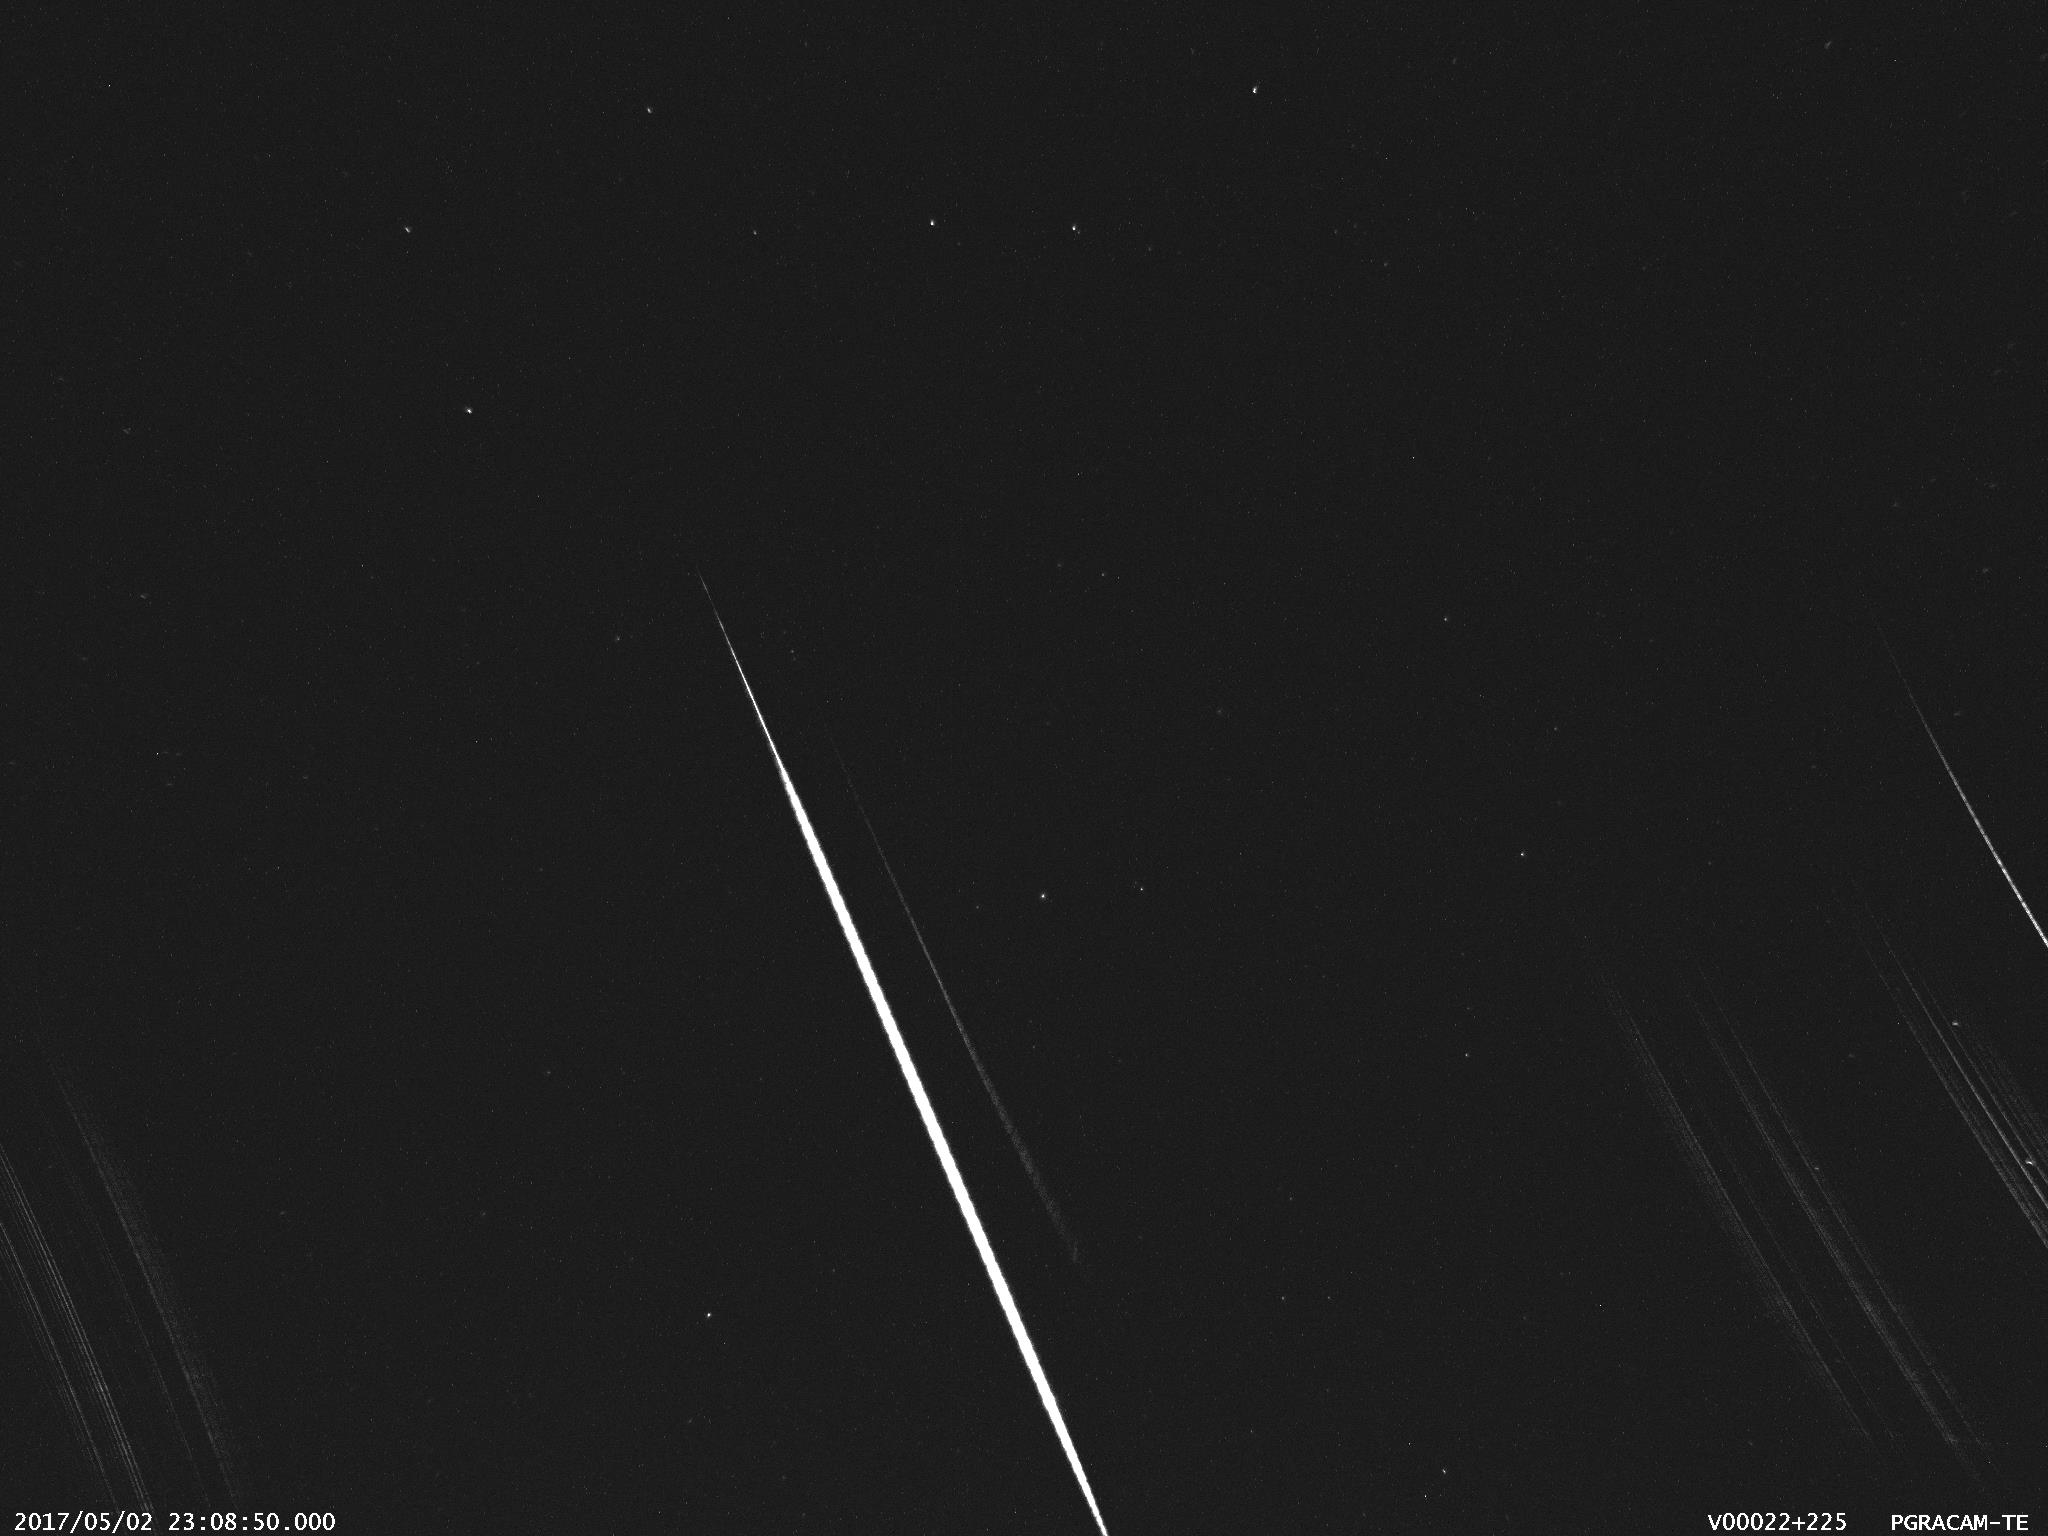 Obr. 16: Spektrum jasného meteoru 20170502_230850, spektrograf PGRACAM-TE. Autor: Hvězdárna Valašské Meziříčí